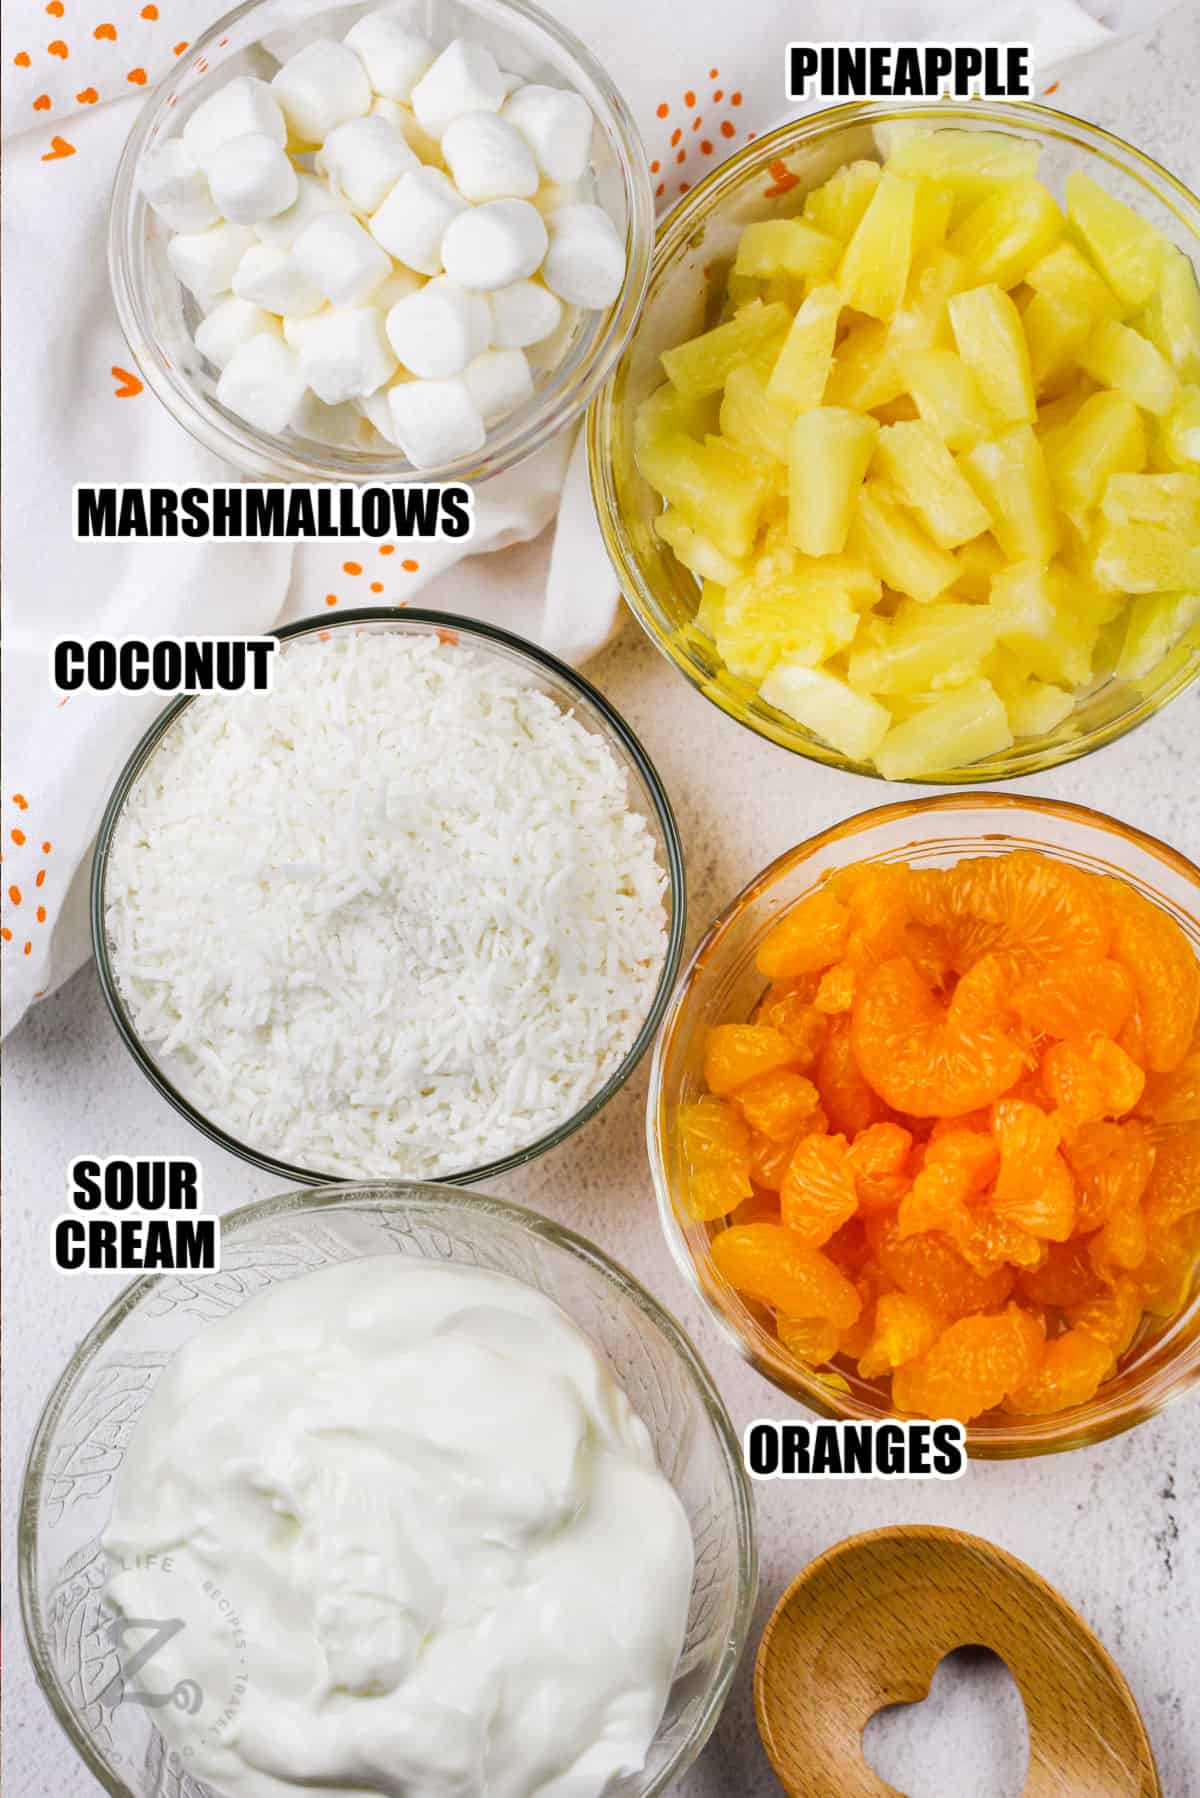 marshmallows, pineapple, coconut, oranges, sour cream assembled to make ambrosia fruit salad